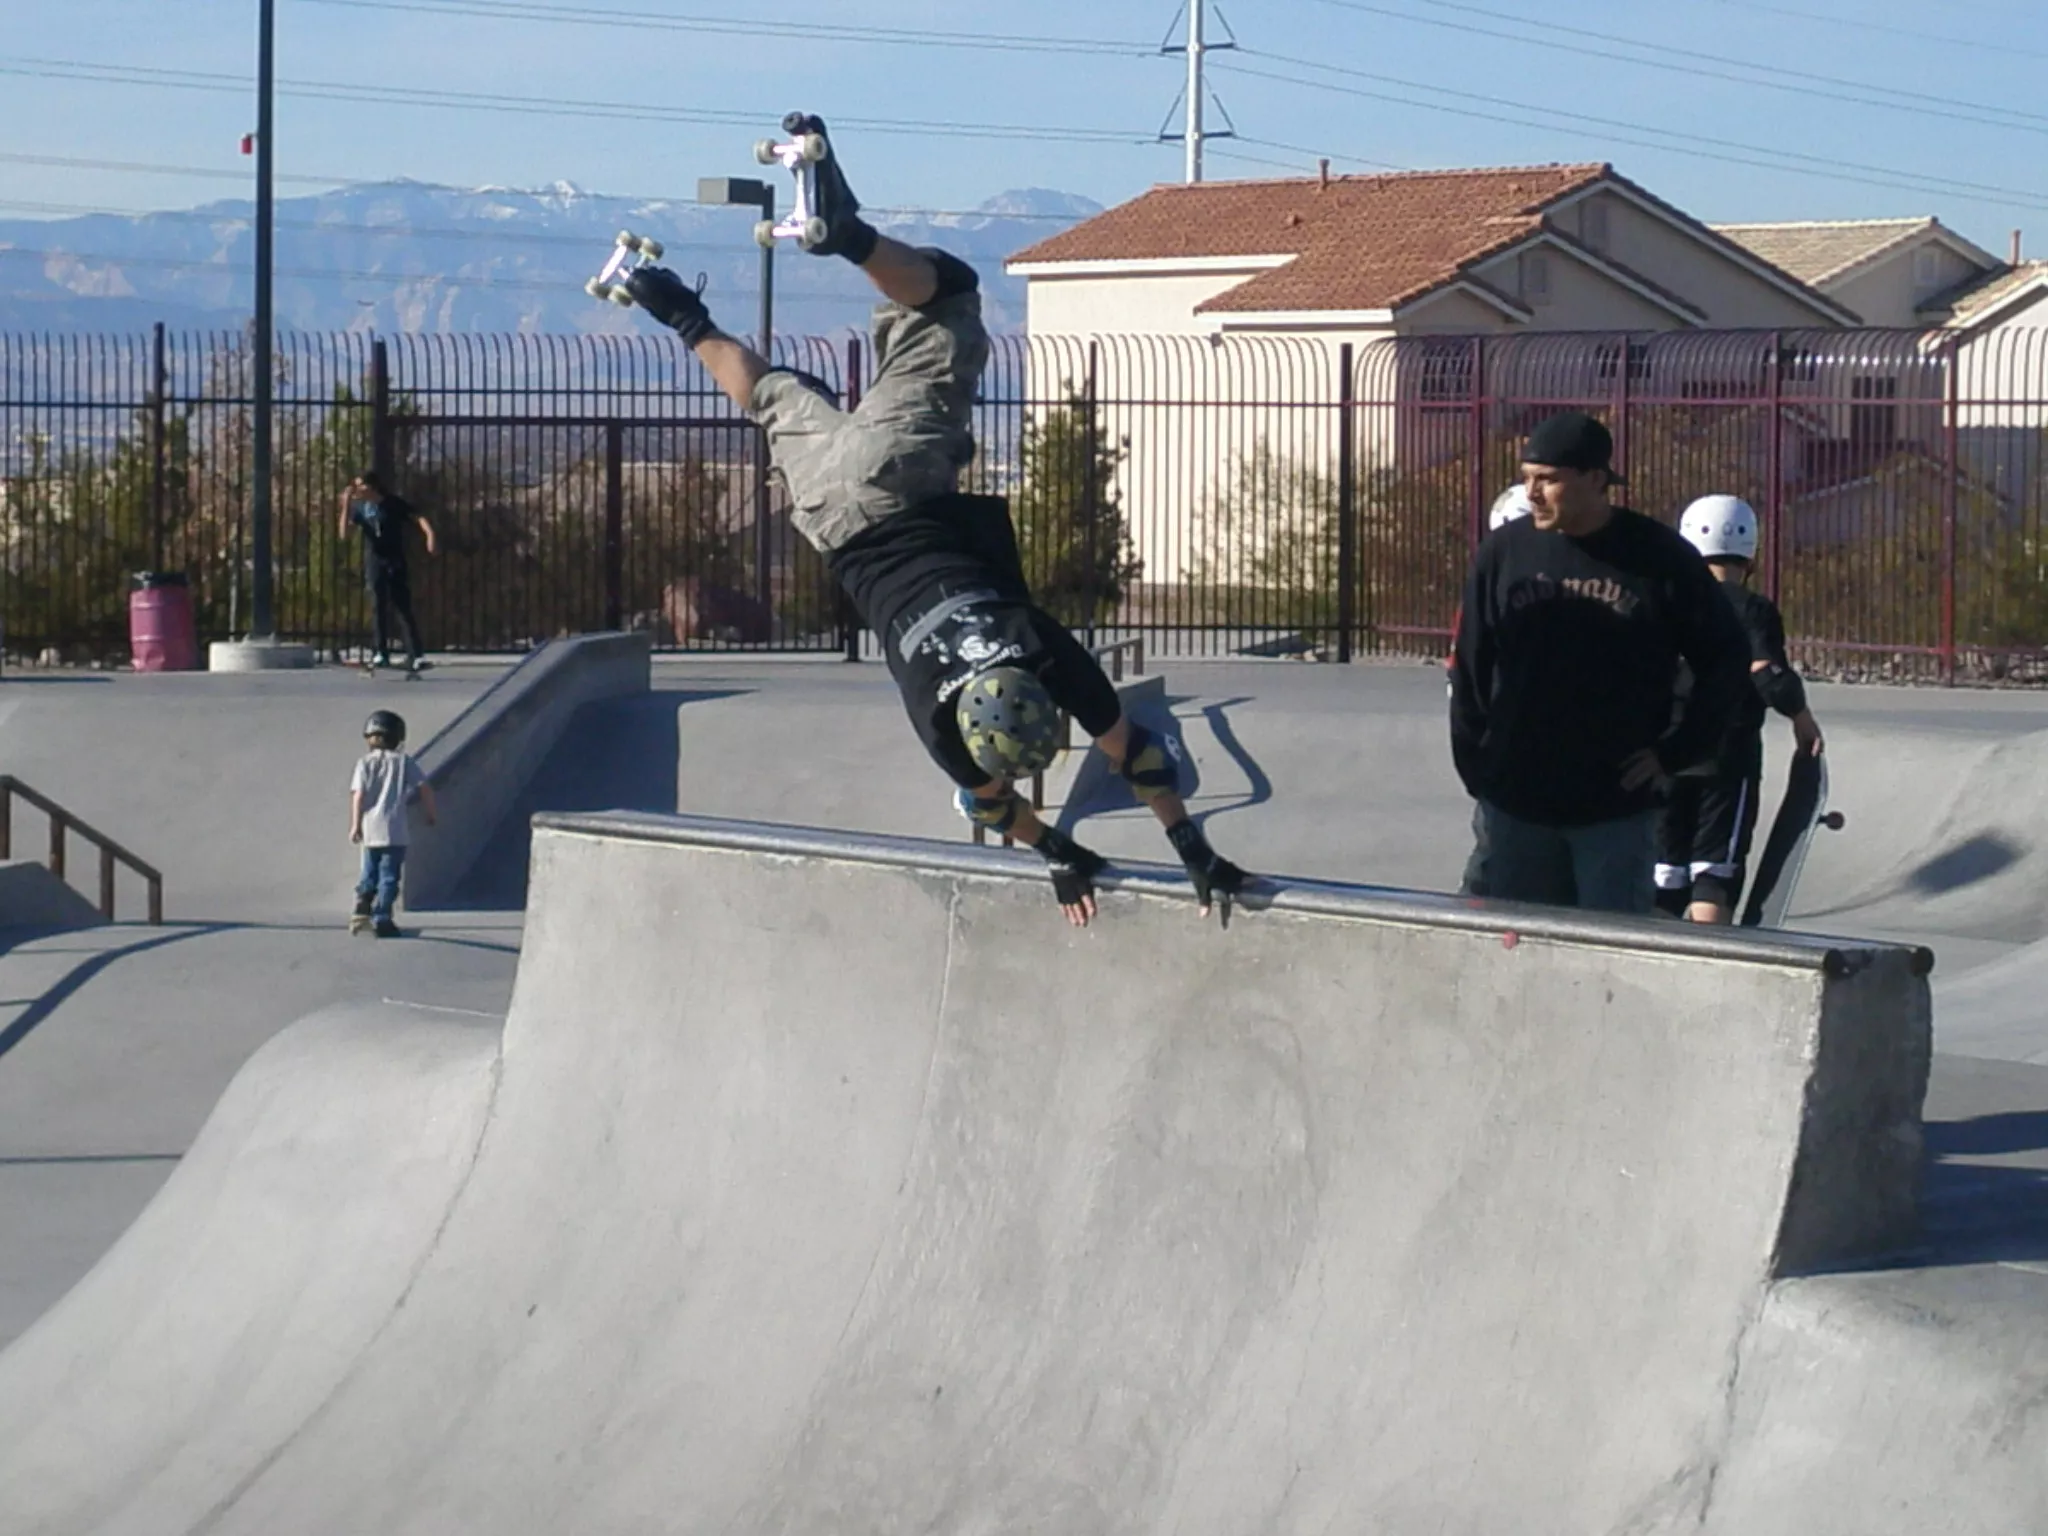 Hollywood Skatepark in USA, North America | Skateboarding - Rated 0.7